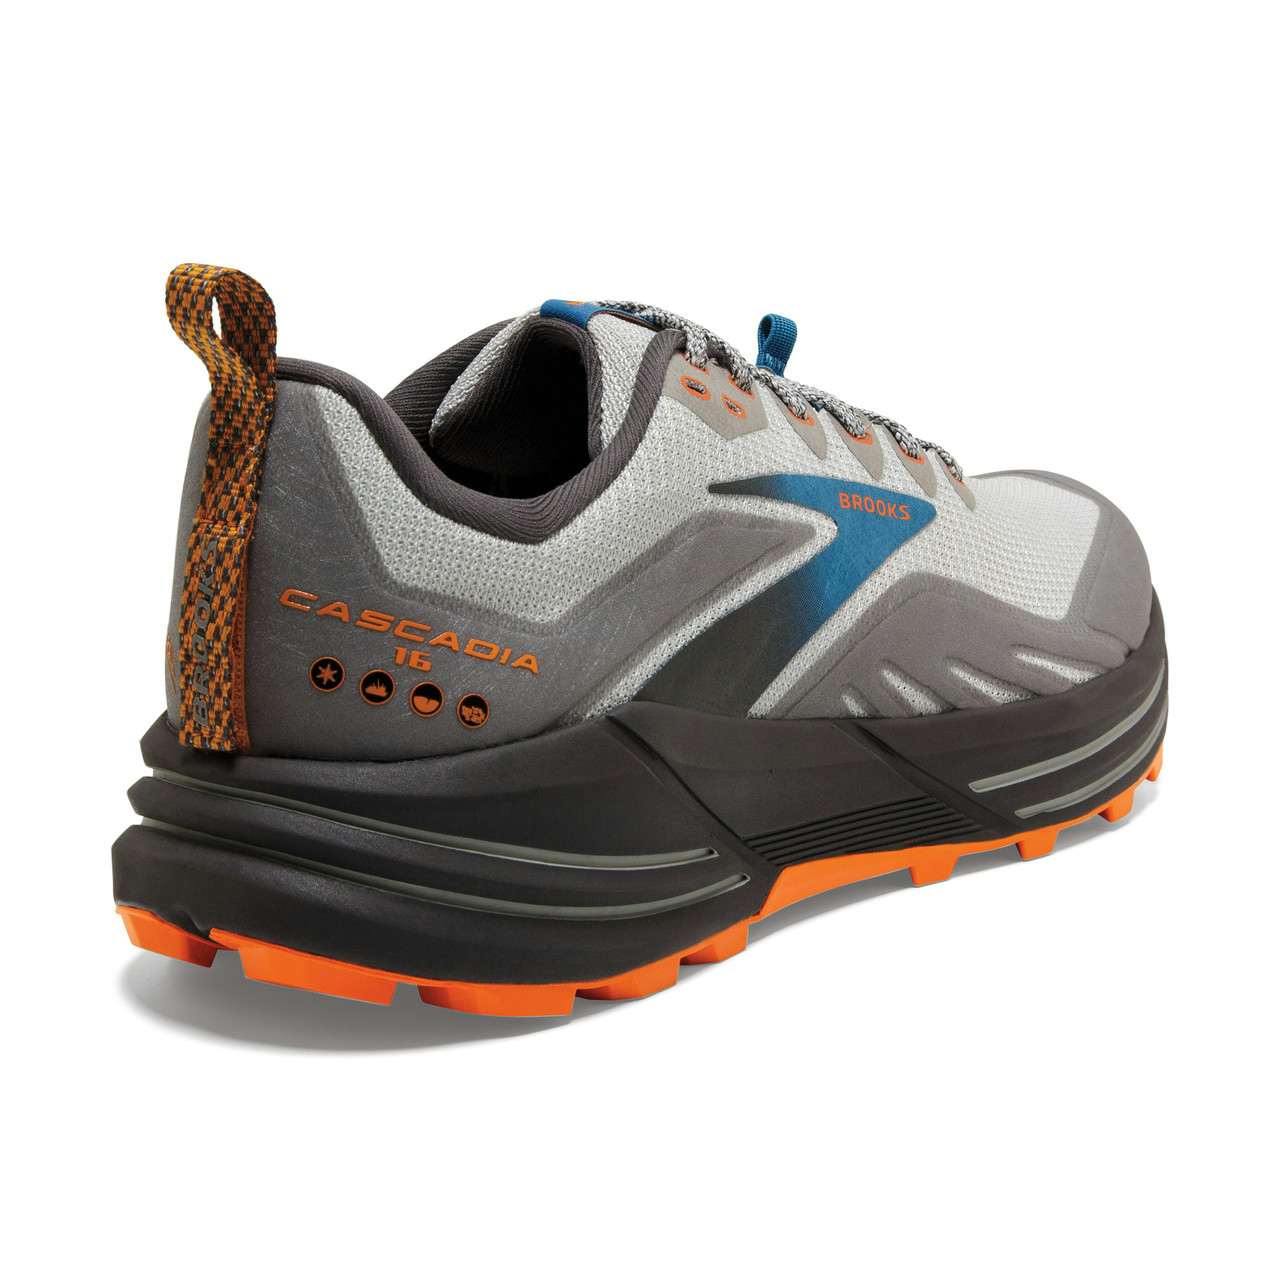 Cascadia 16 Trail Running Shoes Oyster Mushroom/Alloy/Ora